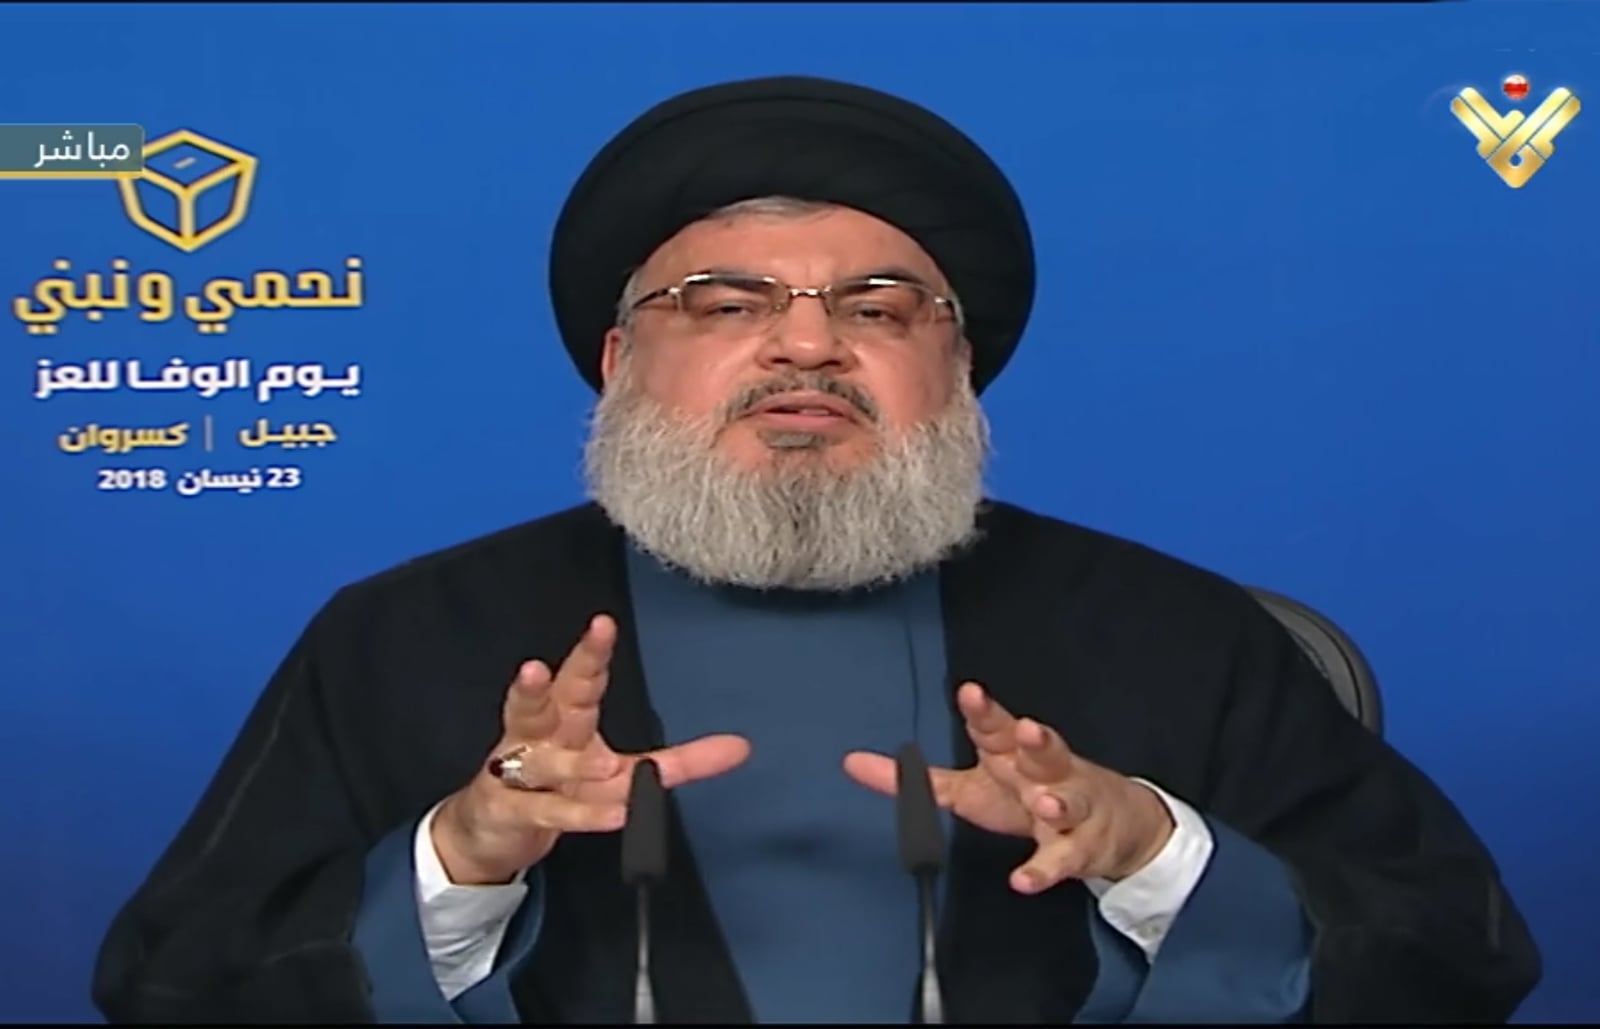 Lder Hezbollahu Sayed Hassan Nasrallah.